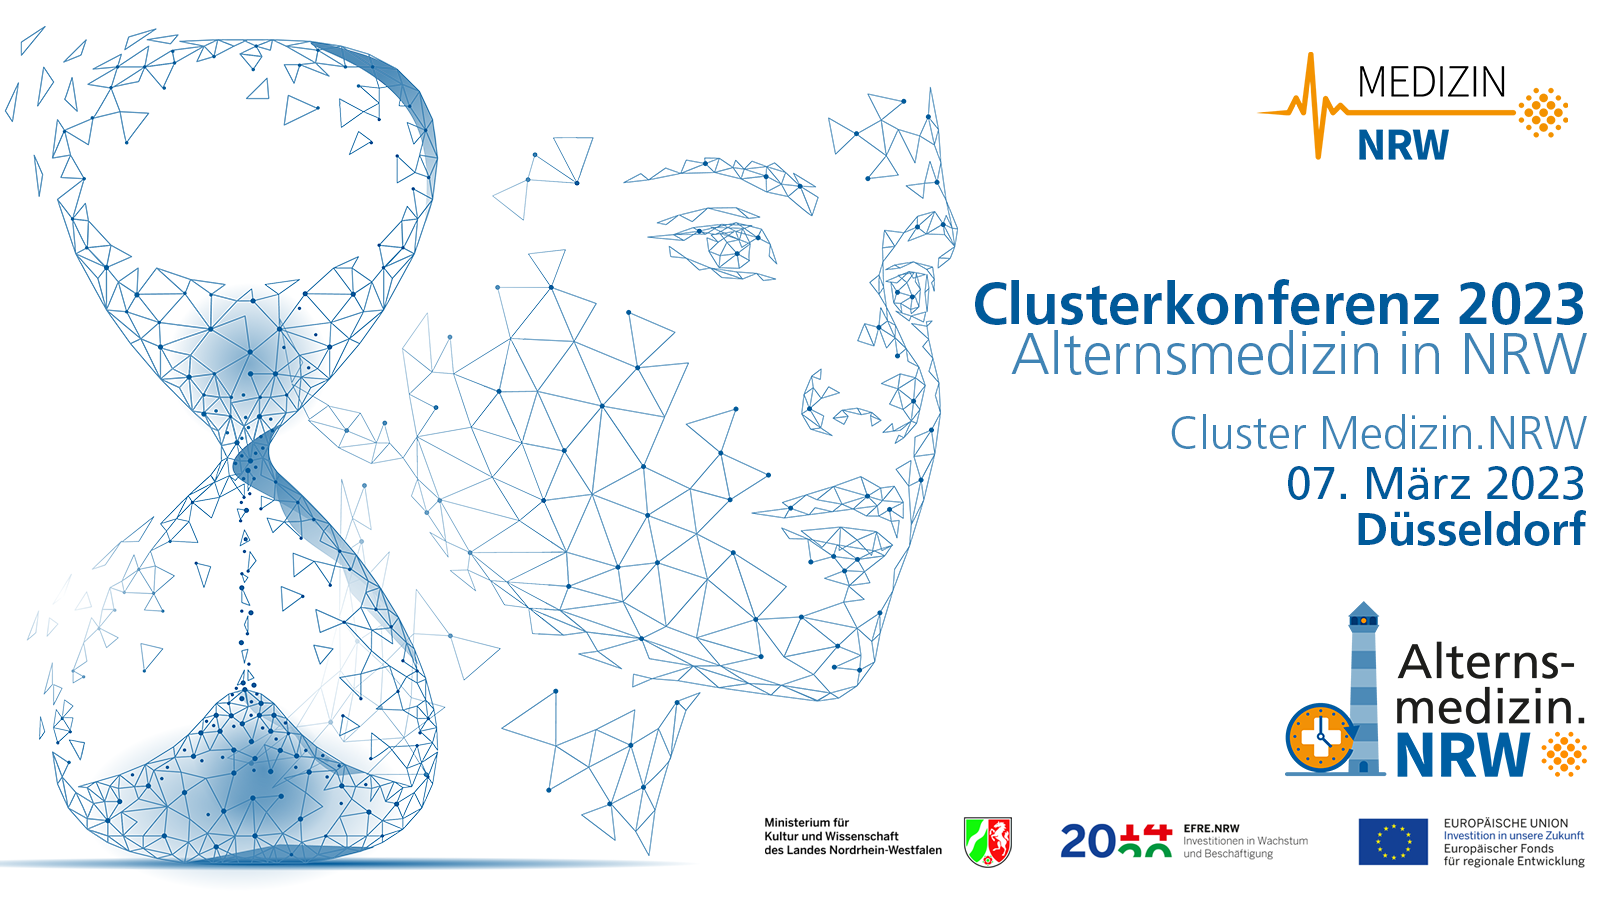 Medizin.NRW invites you: Cluster Conference 2023